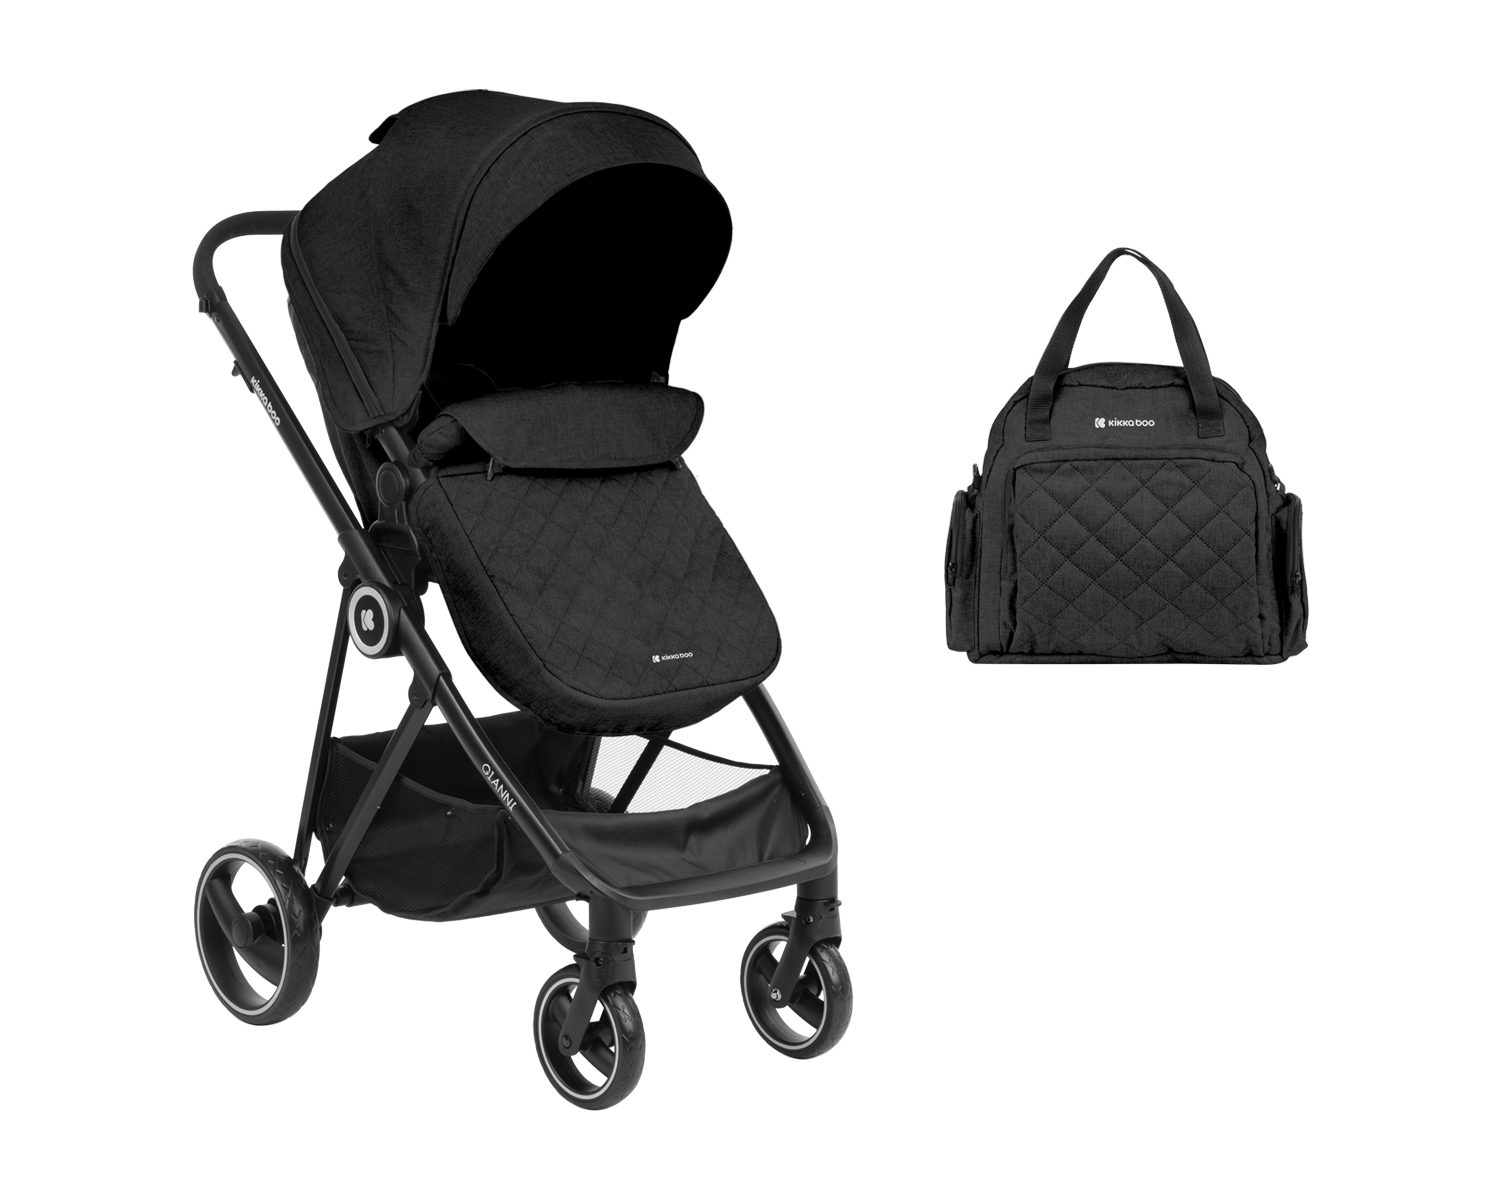 Kikka Boo Gianni 2 in 1 Reversible Baby Stroller Black 31001020121